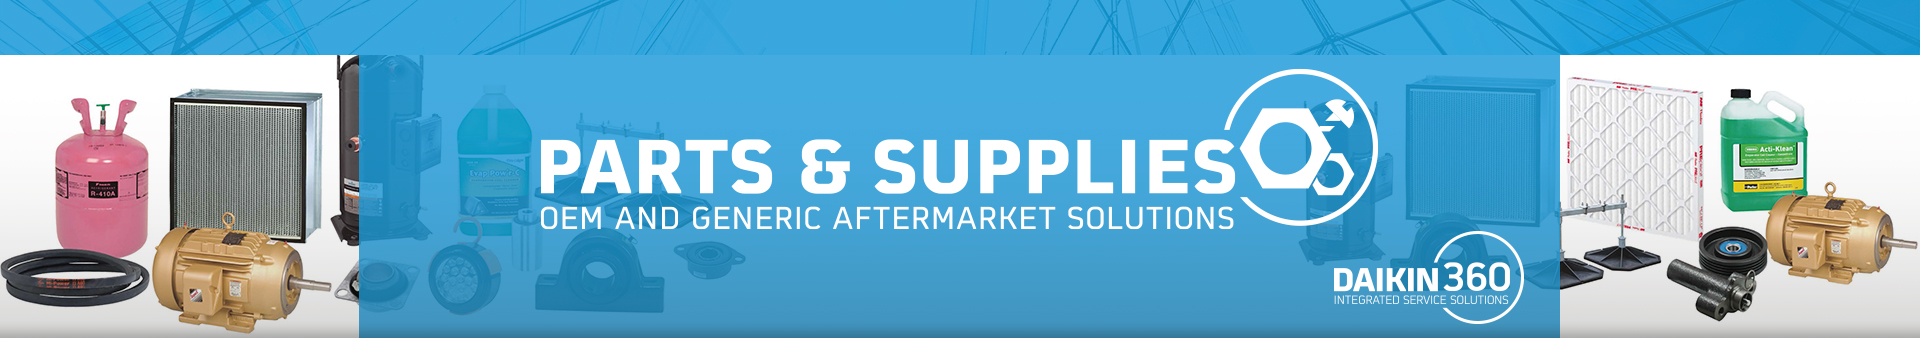 Daikin Aftermarket Parts and Supplies